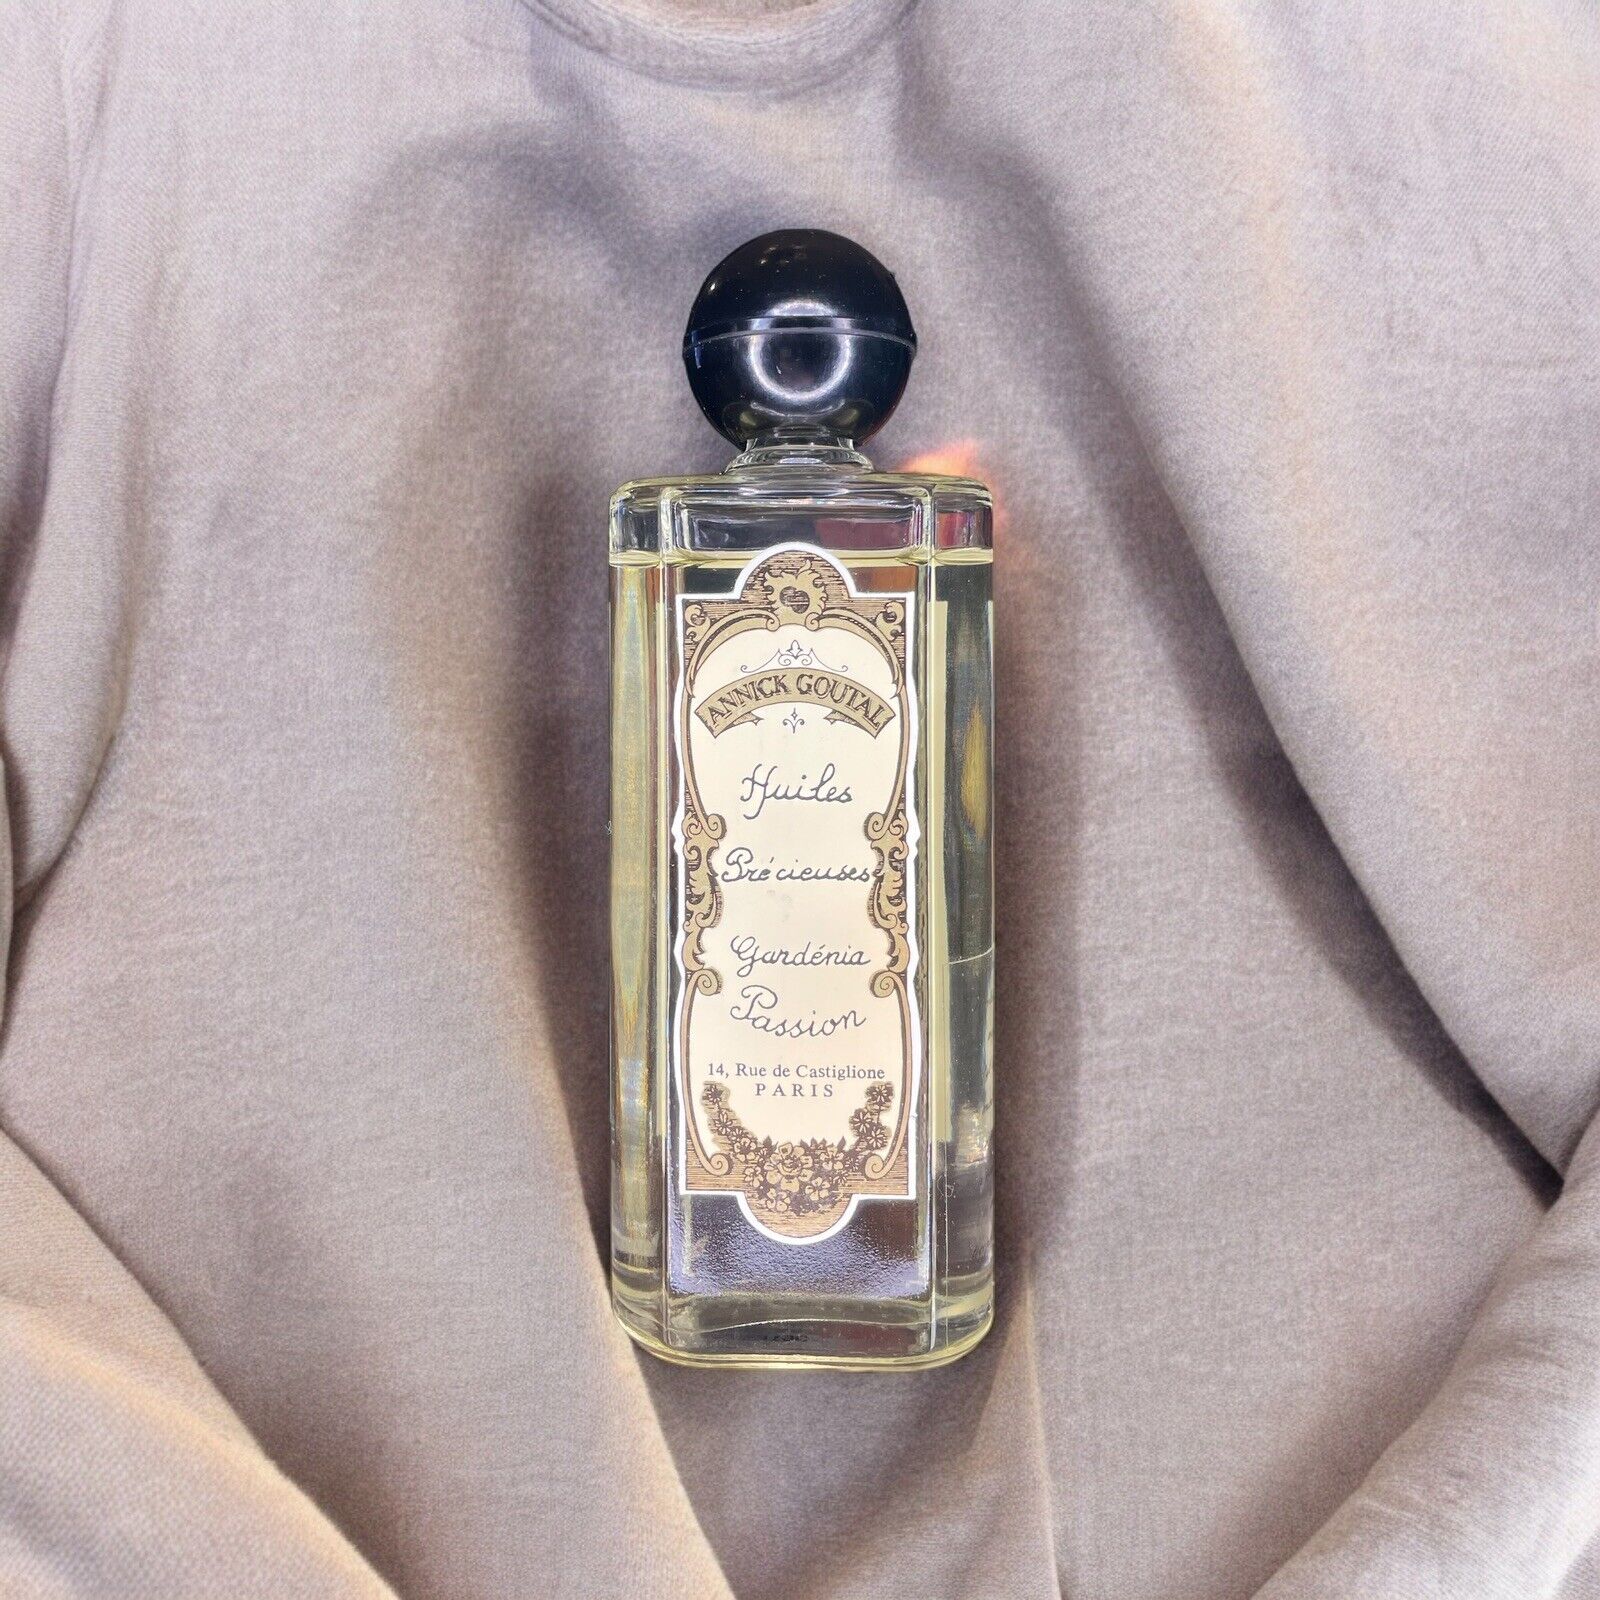 Vintage Annick Goutal Precieuses Gardenia Passion Perfumed Body Oil 125 mL